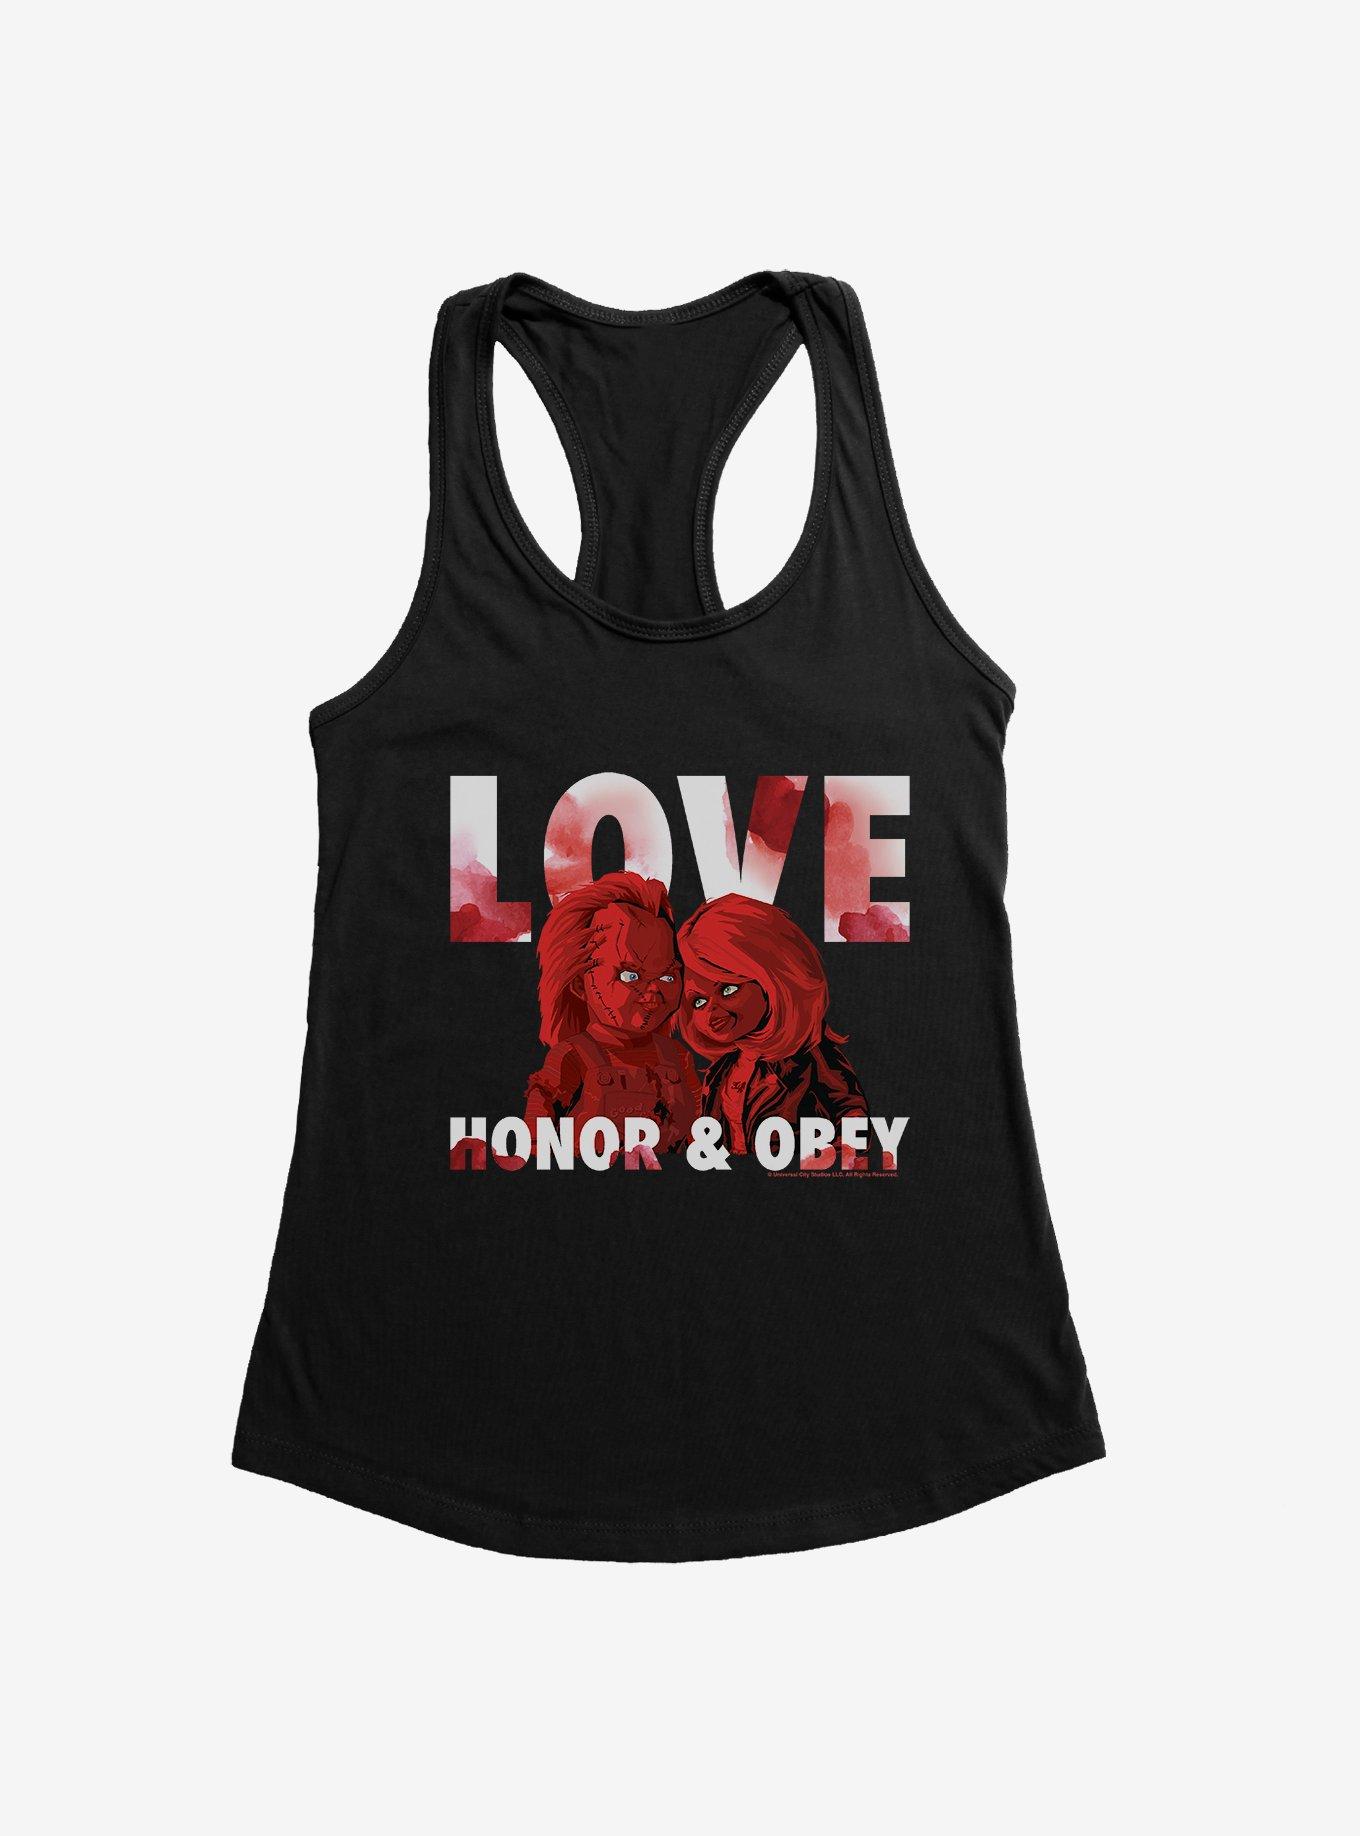 Chucky Love, Honor & Obey Girls Tank